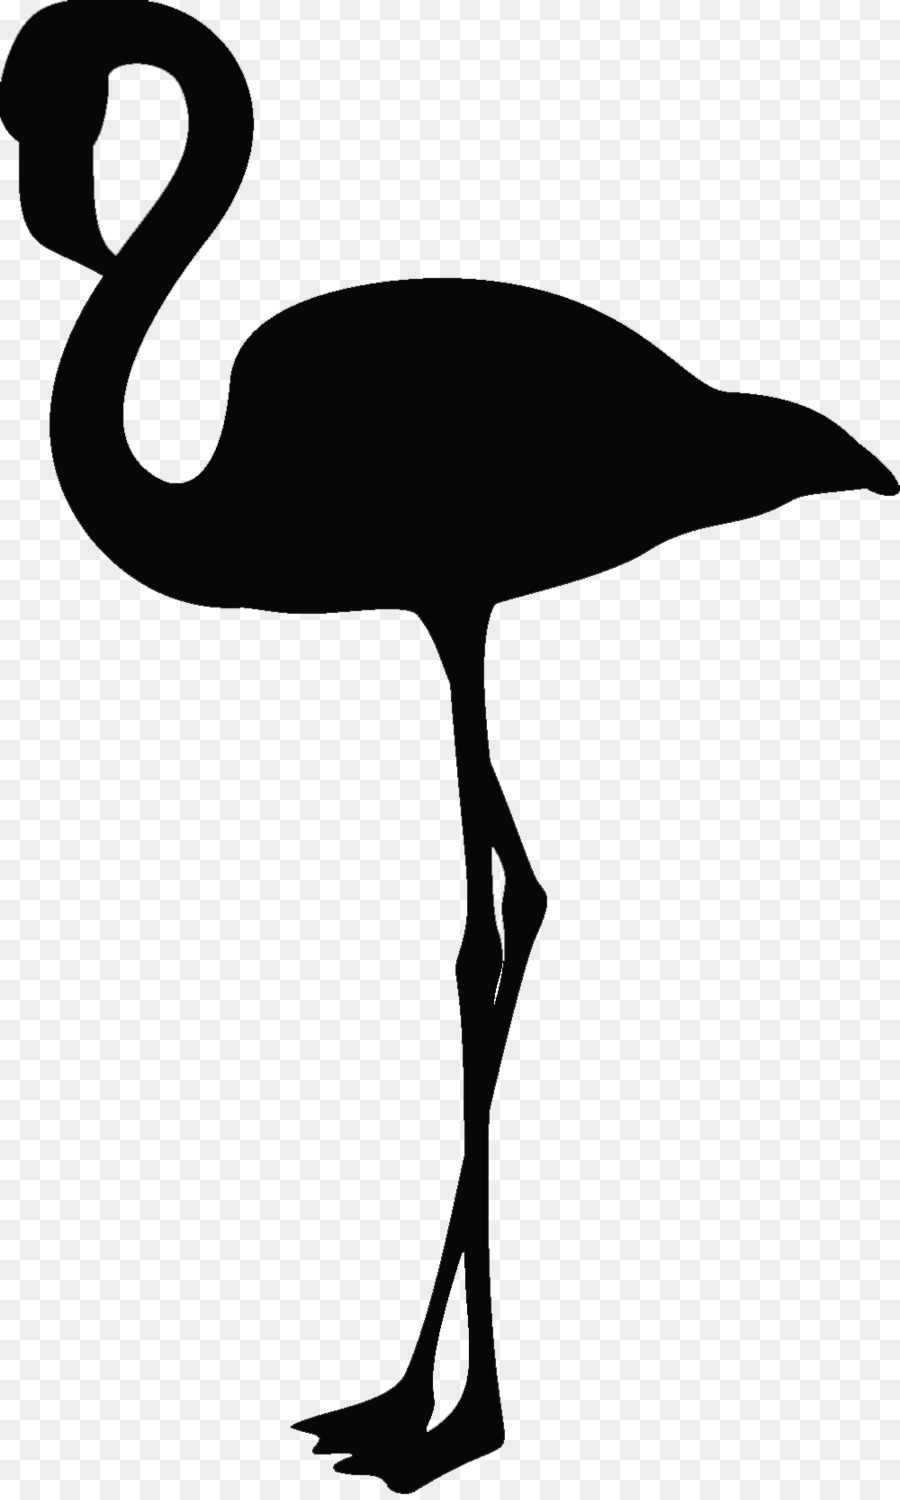 Bird Flamingo Silhouette Beak Clip art - Bird png download - 1000*1661 - Free Transparent Bird png Download.